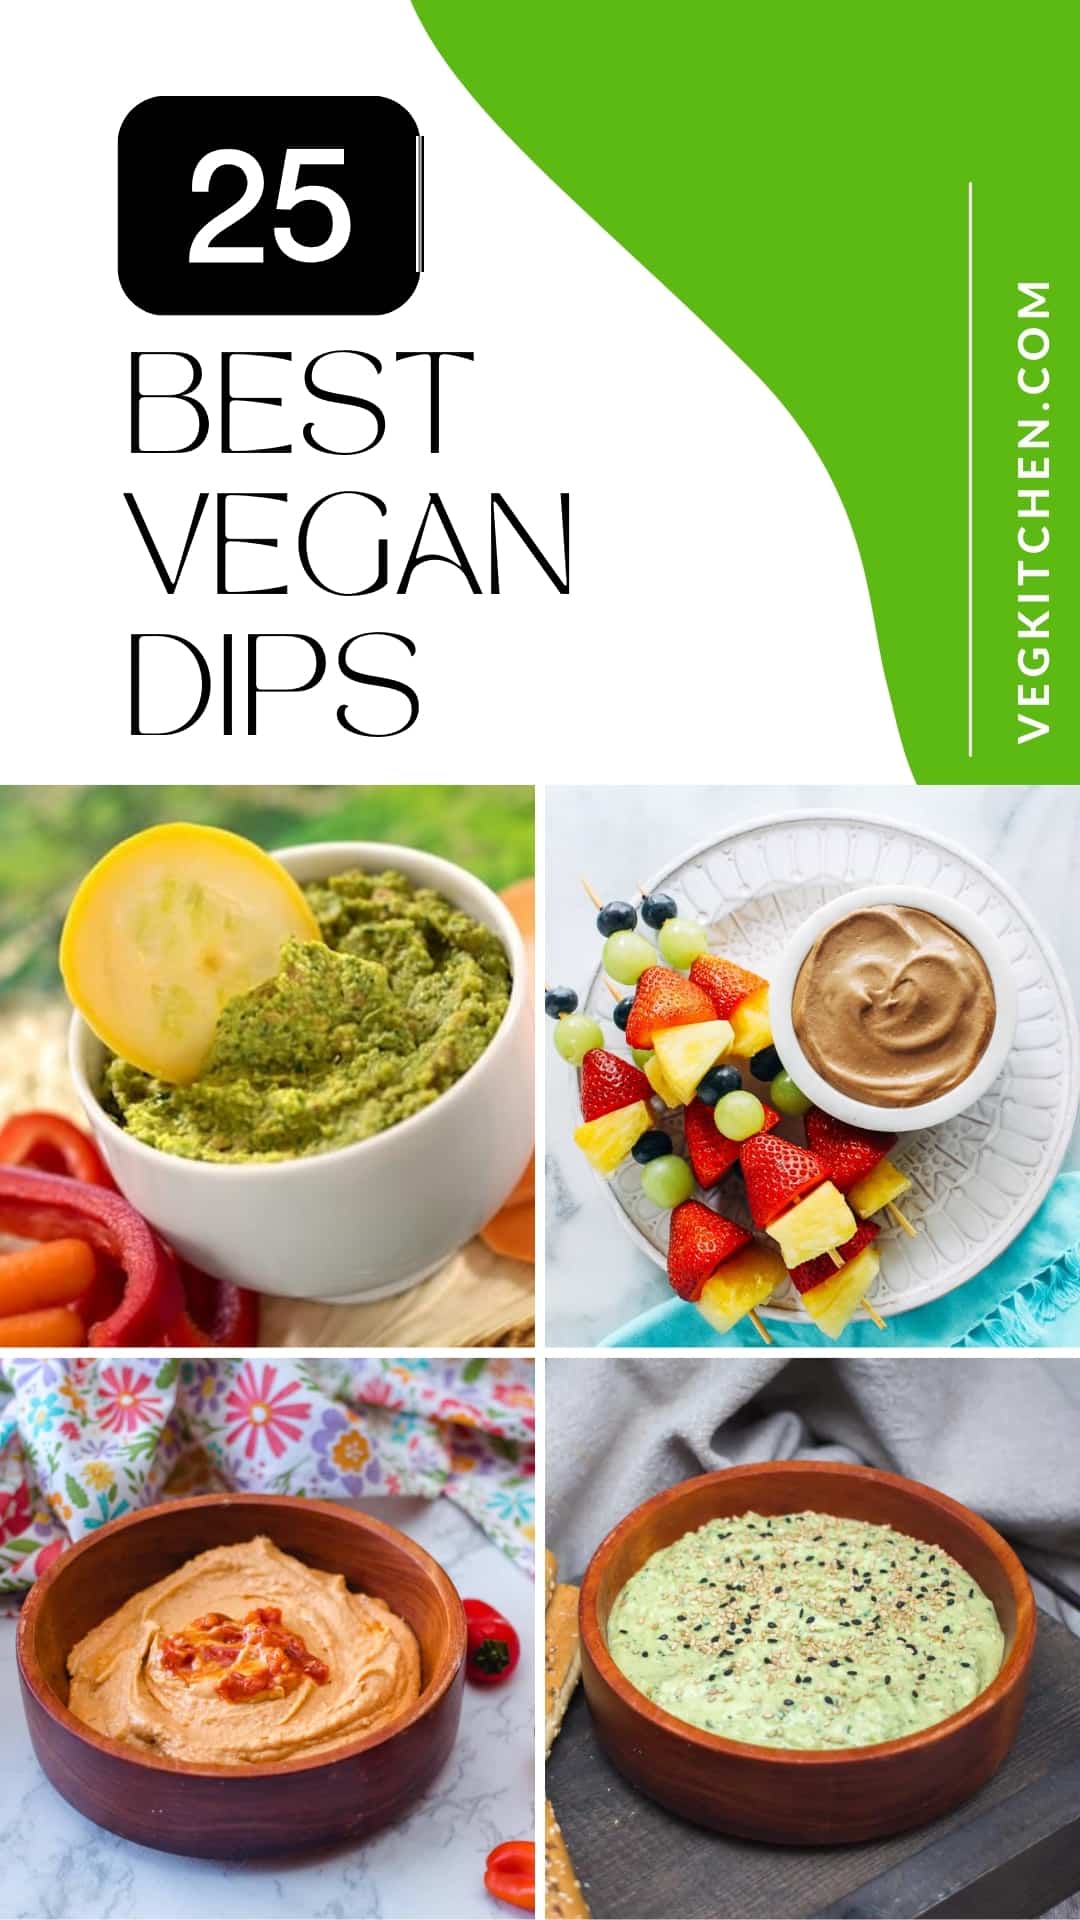 The Best Vegan Dips - From a Vegan Chef - Veg Kitchen